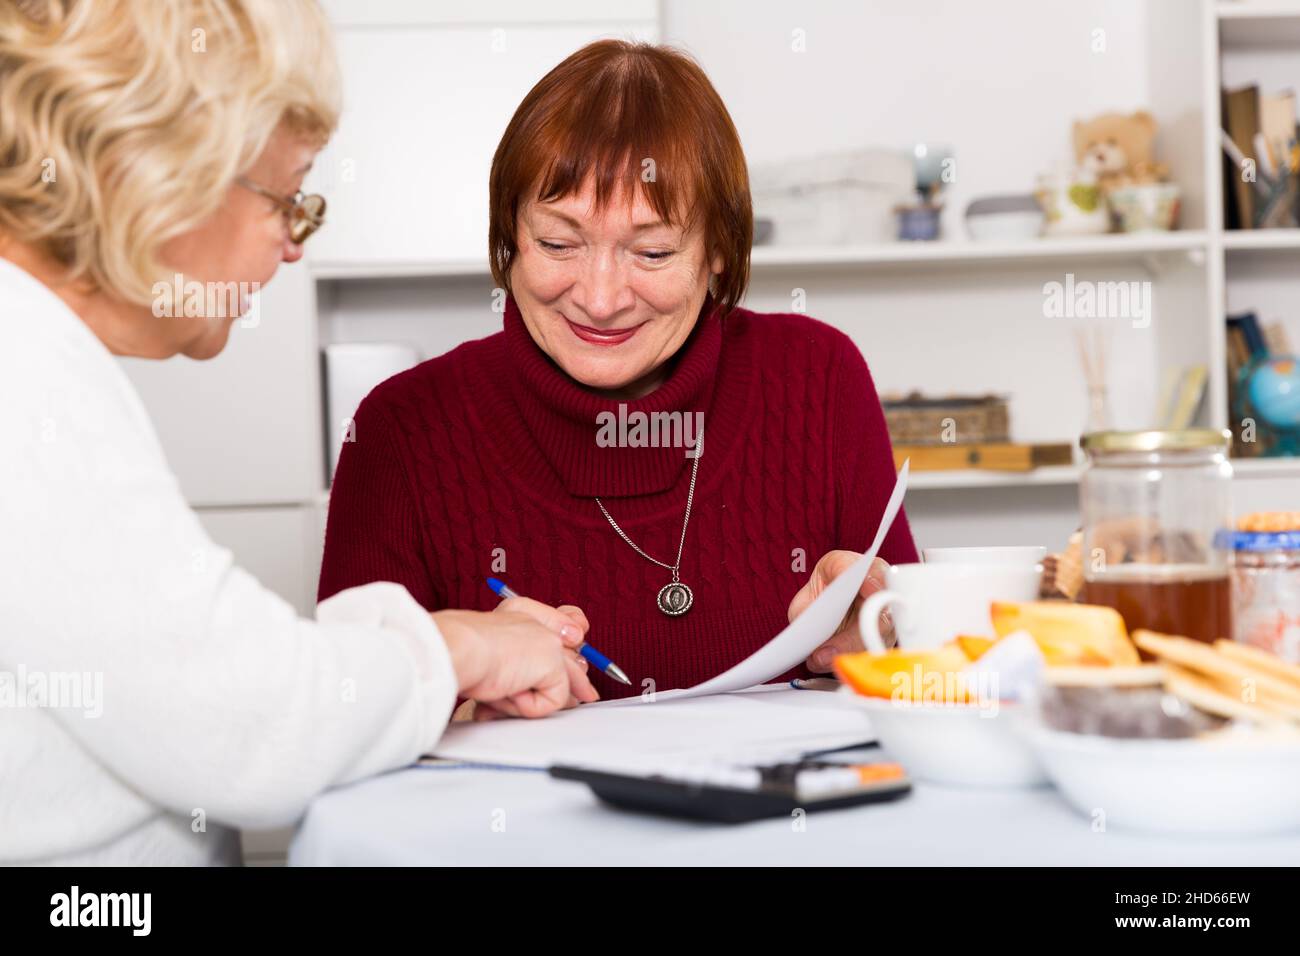 Lächelnde ältere Frauen mit Dokumentation Stockfoto